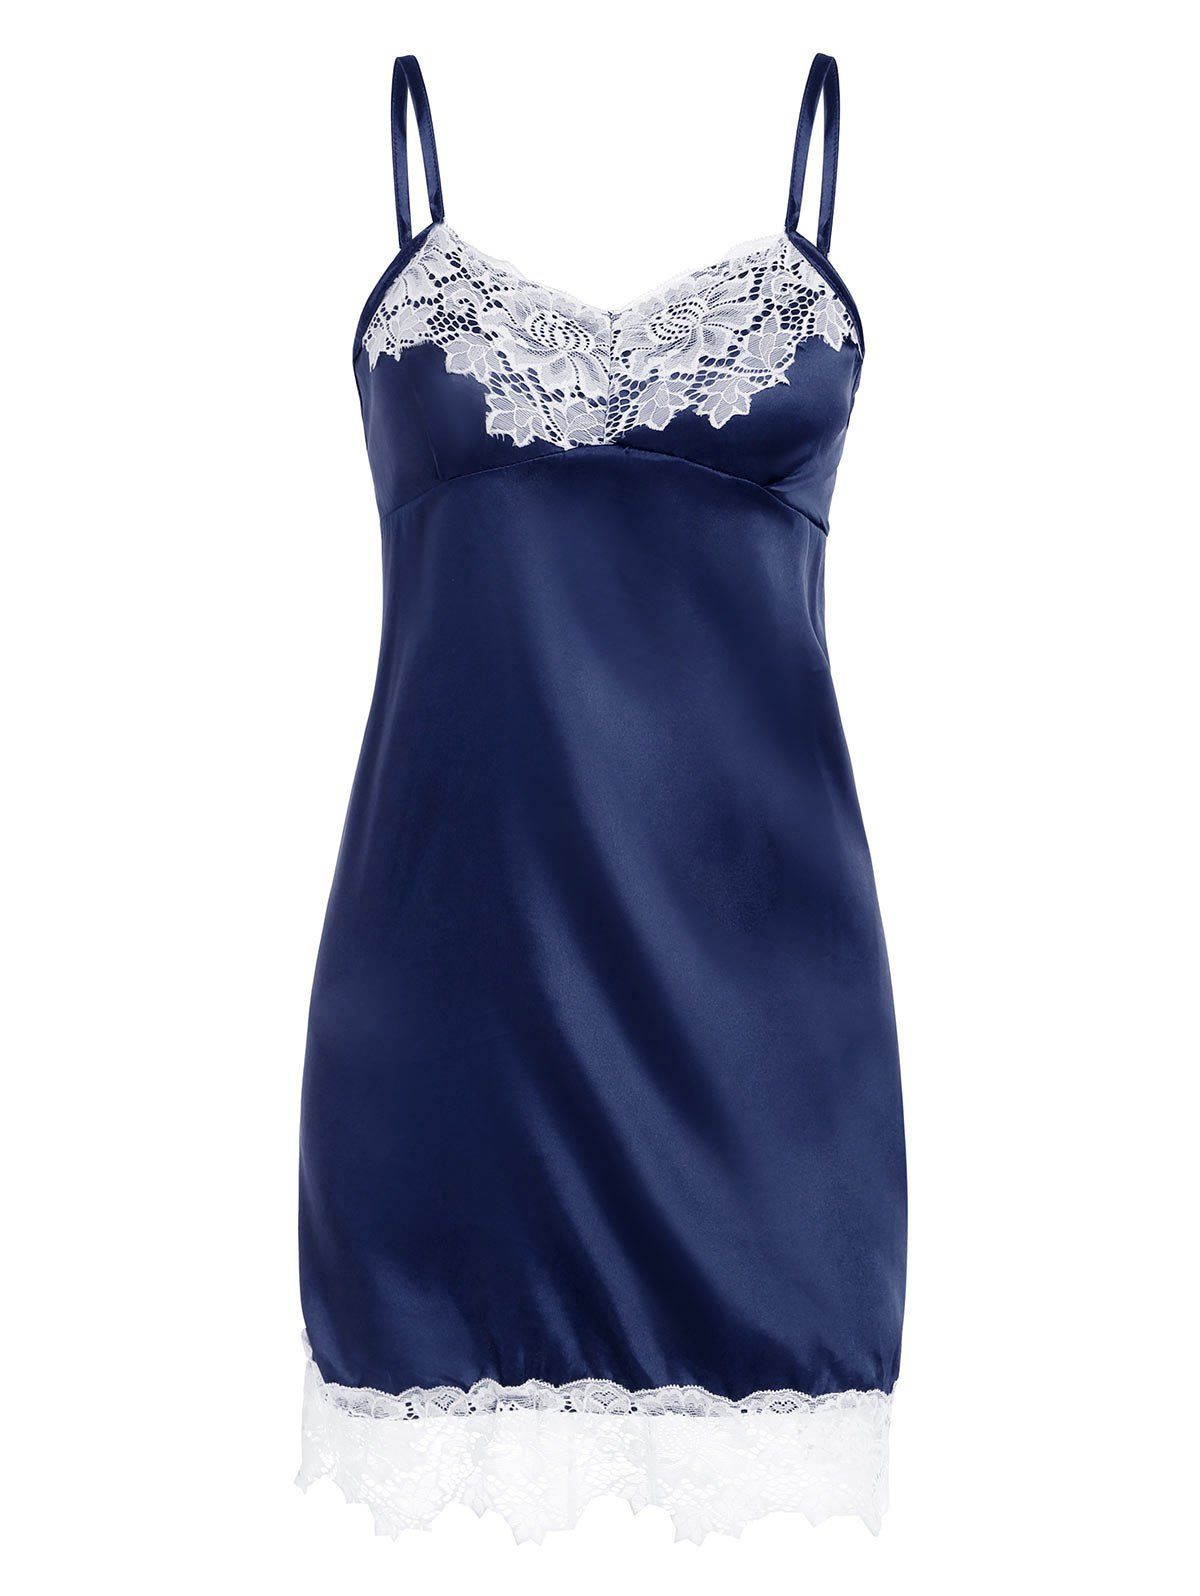 Satin Lace Insert Padded Sleep Dress - DEEP BLUE XL